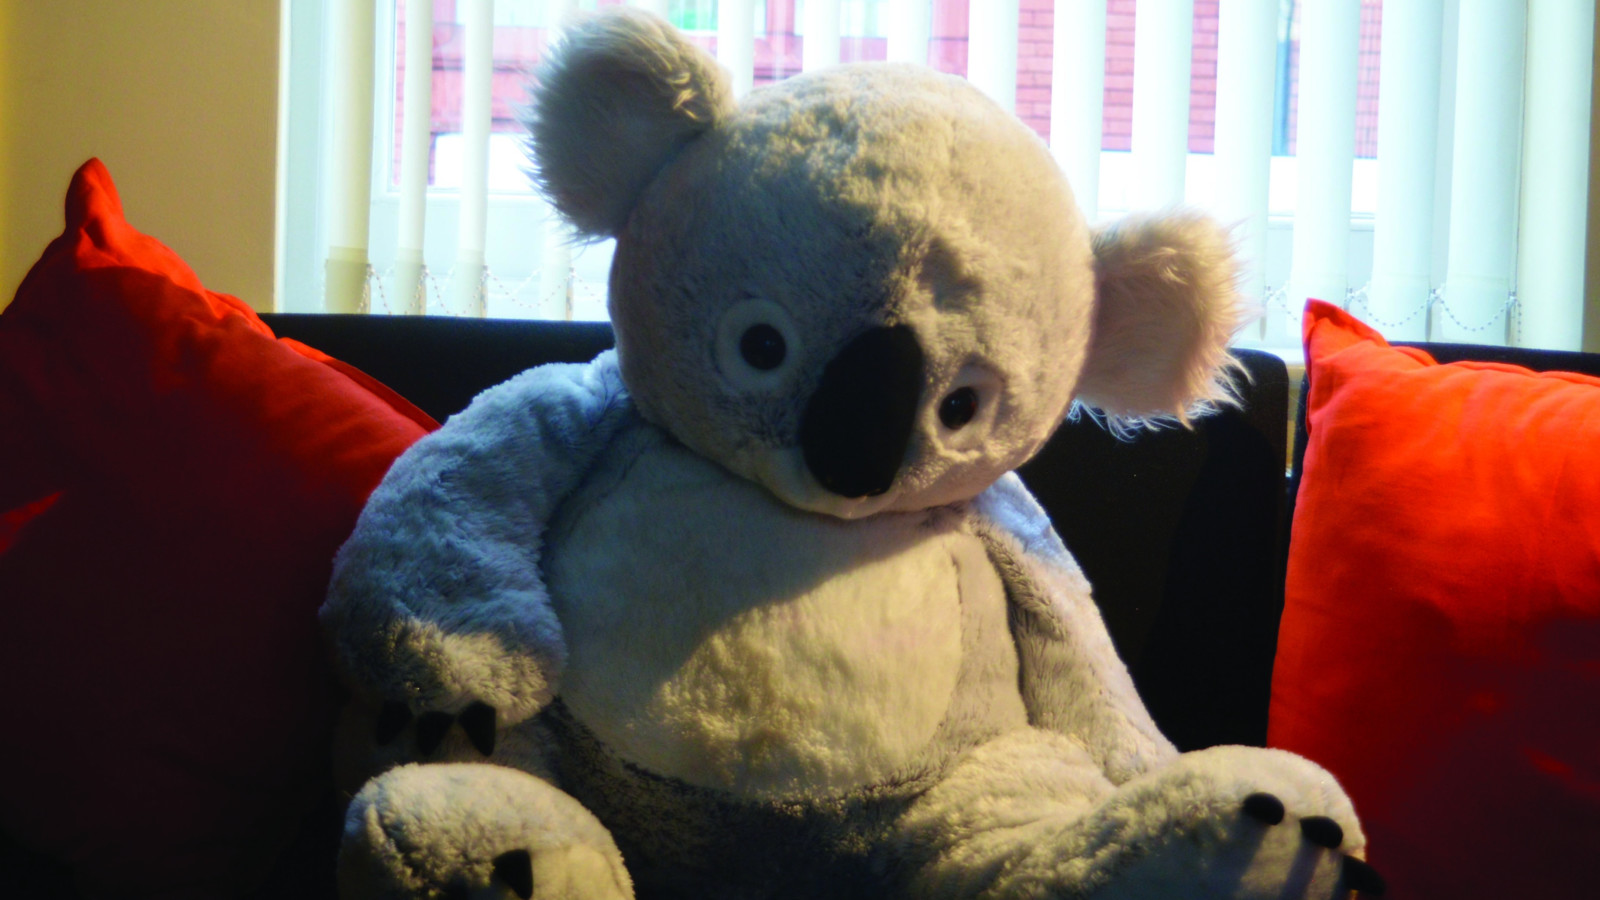 A koala teddy sits on a sofa with red cushions.